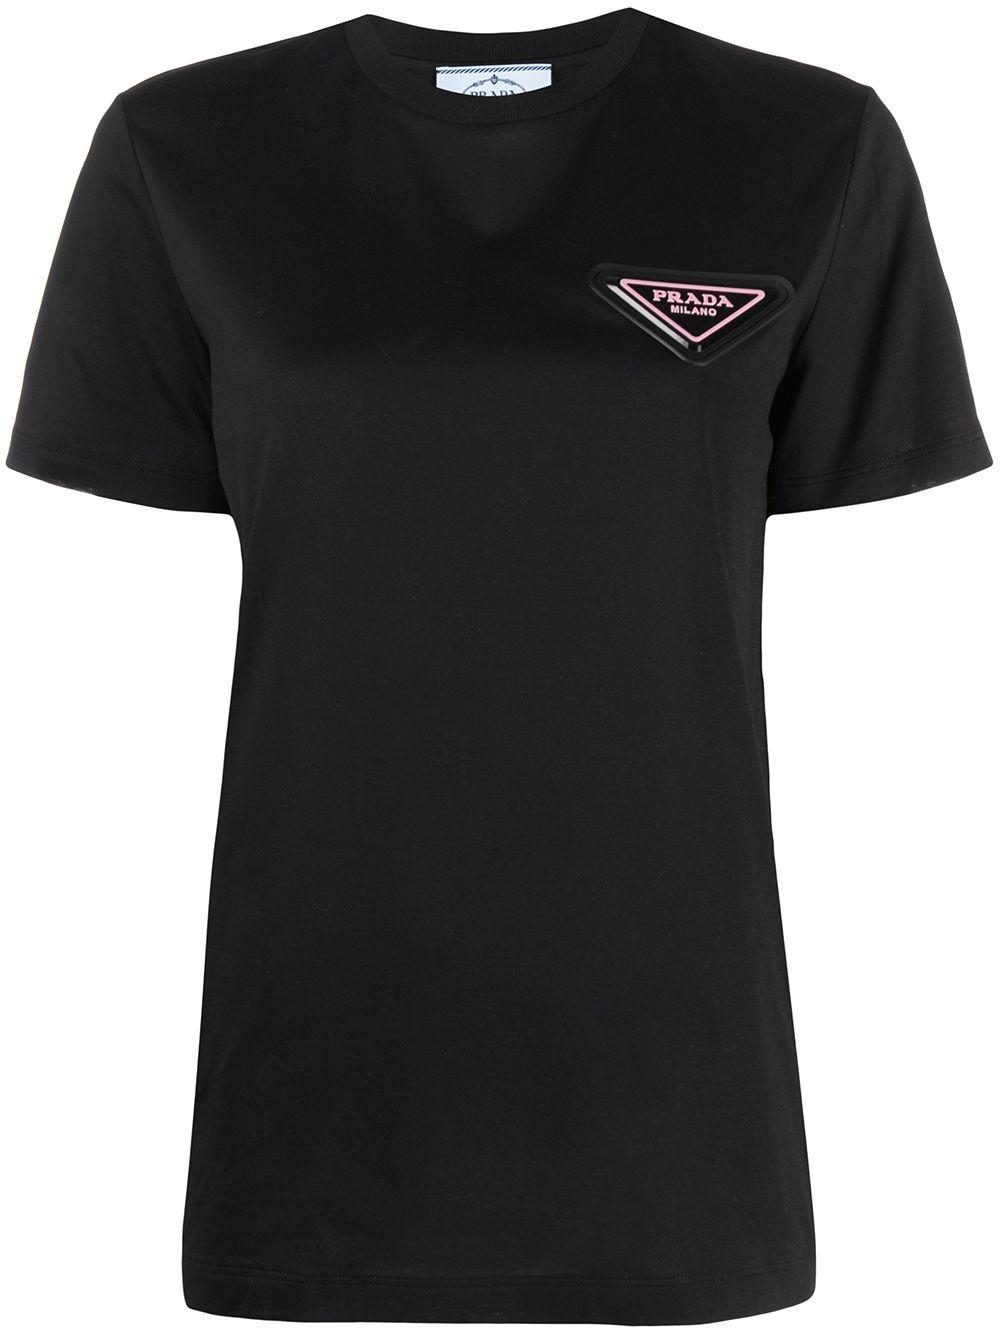 Prada Cotton Triangular Logo Patch T-shirt in Black - Lyst